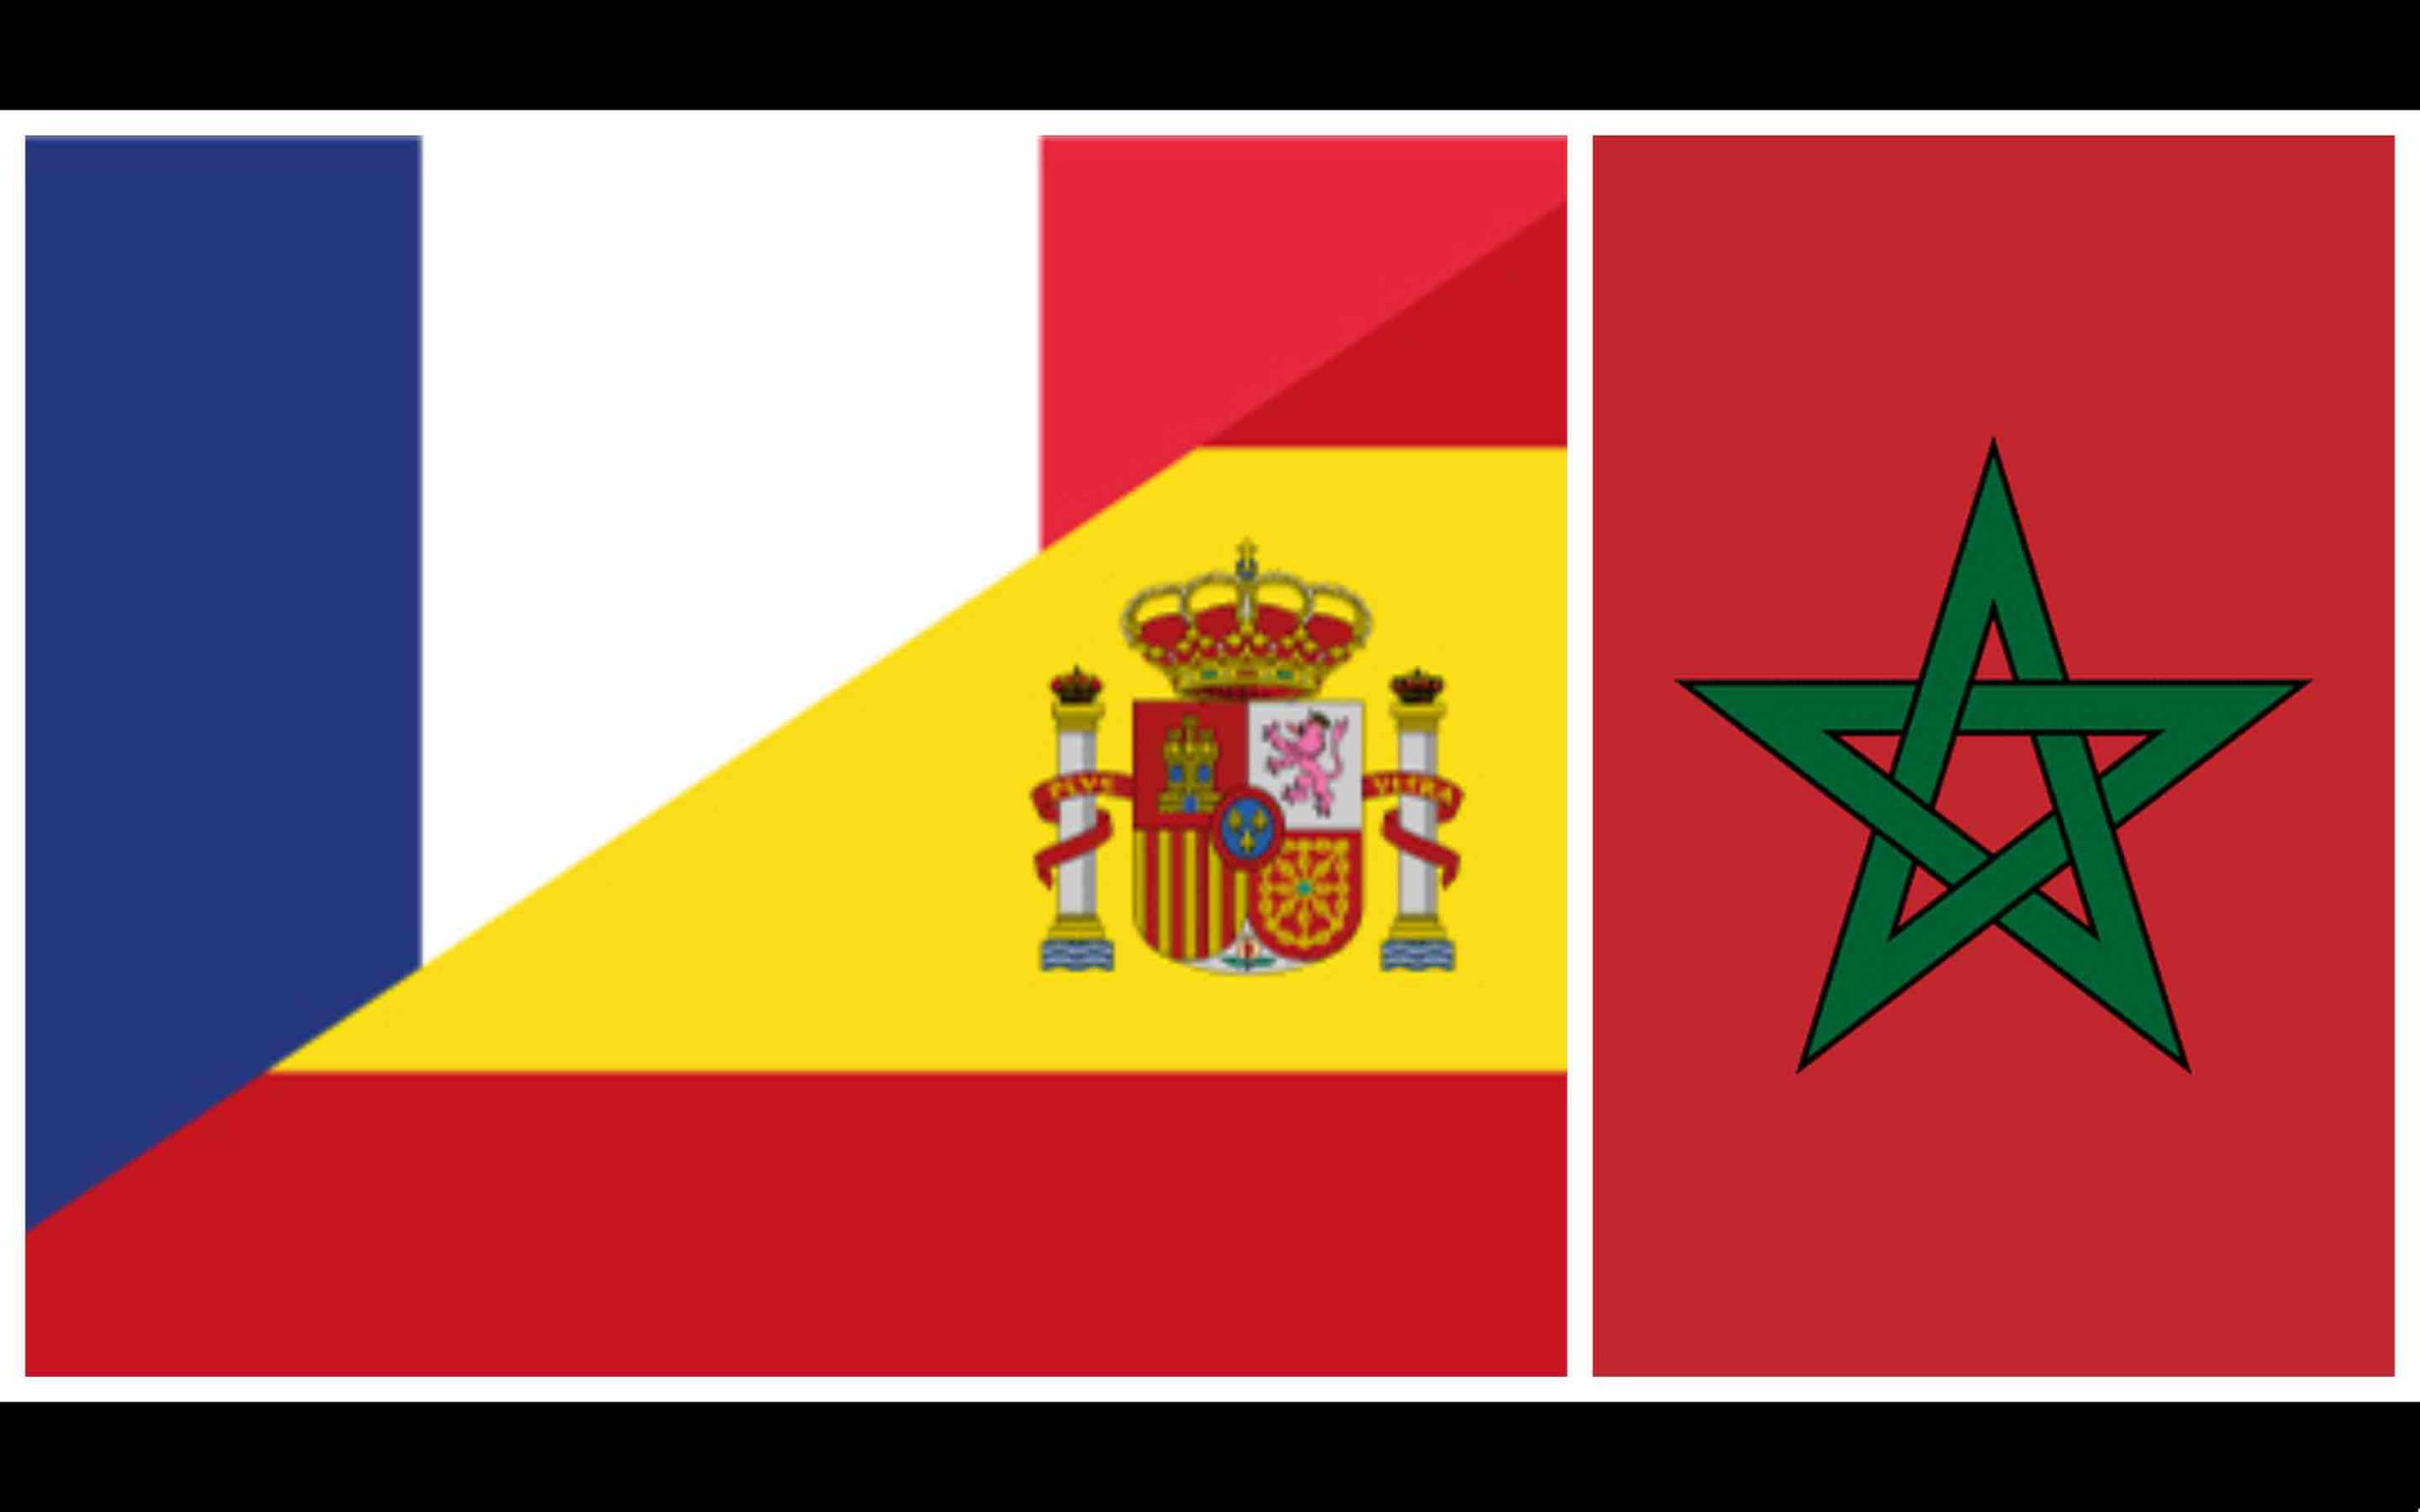 Maroc France Espagne Morocco